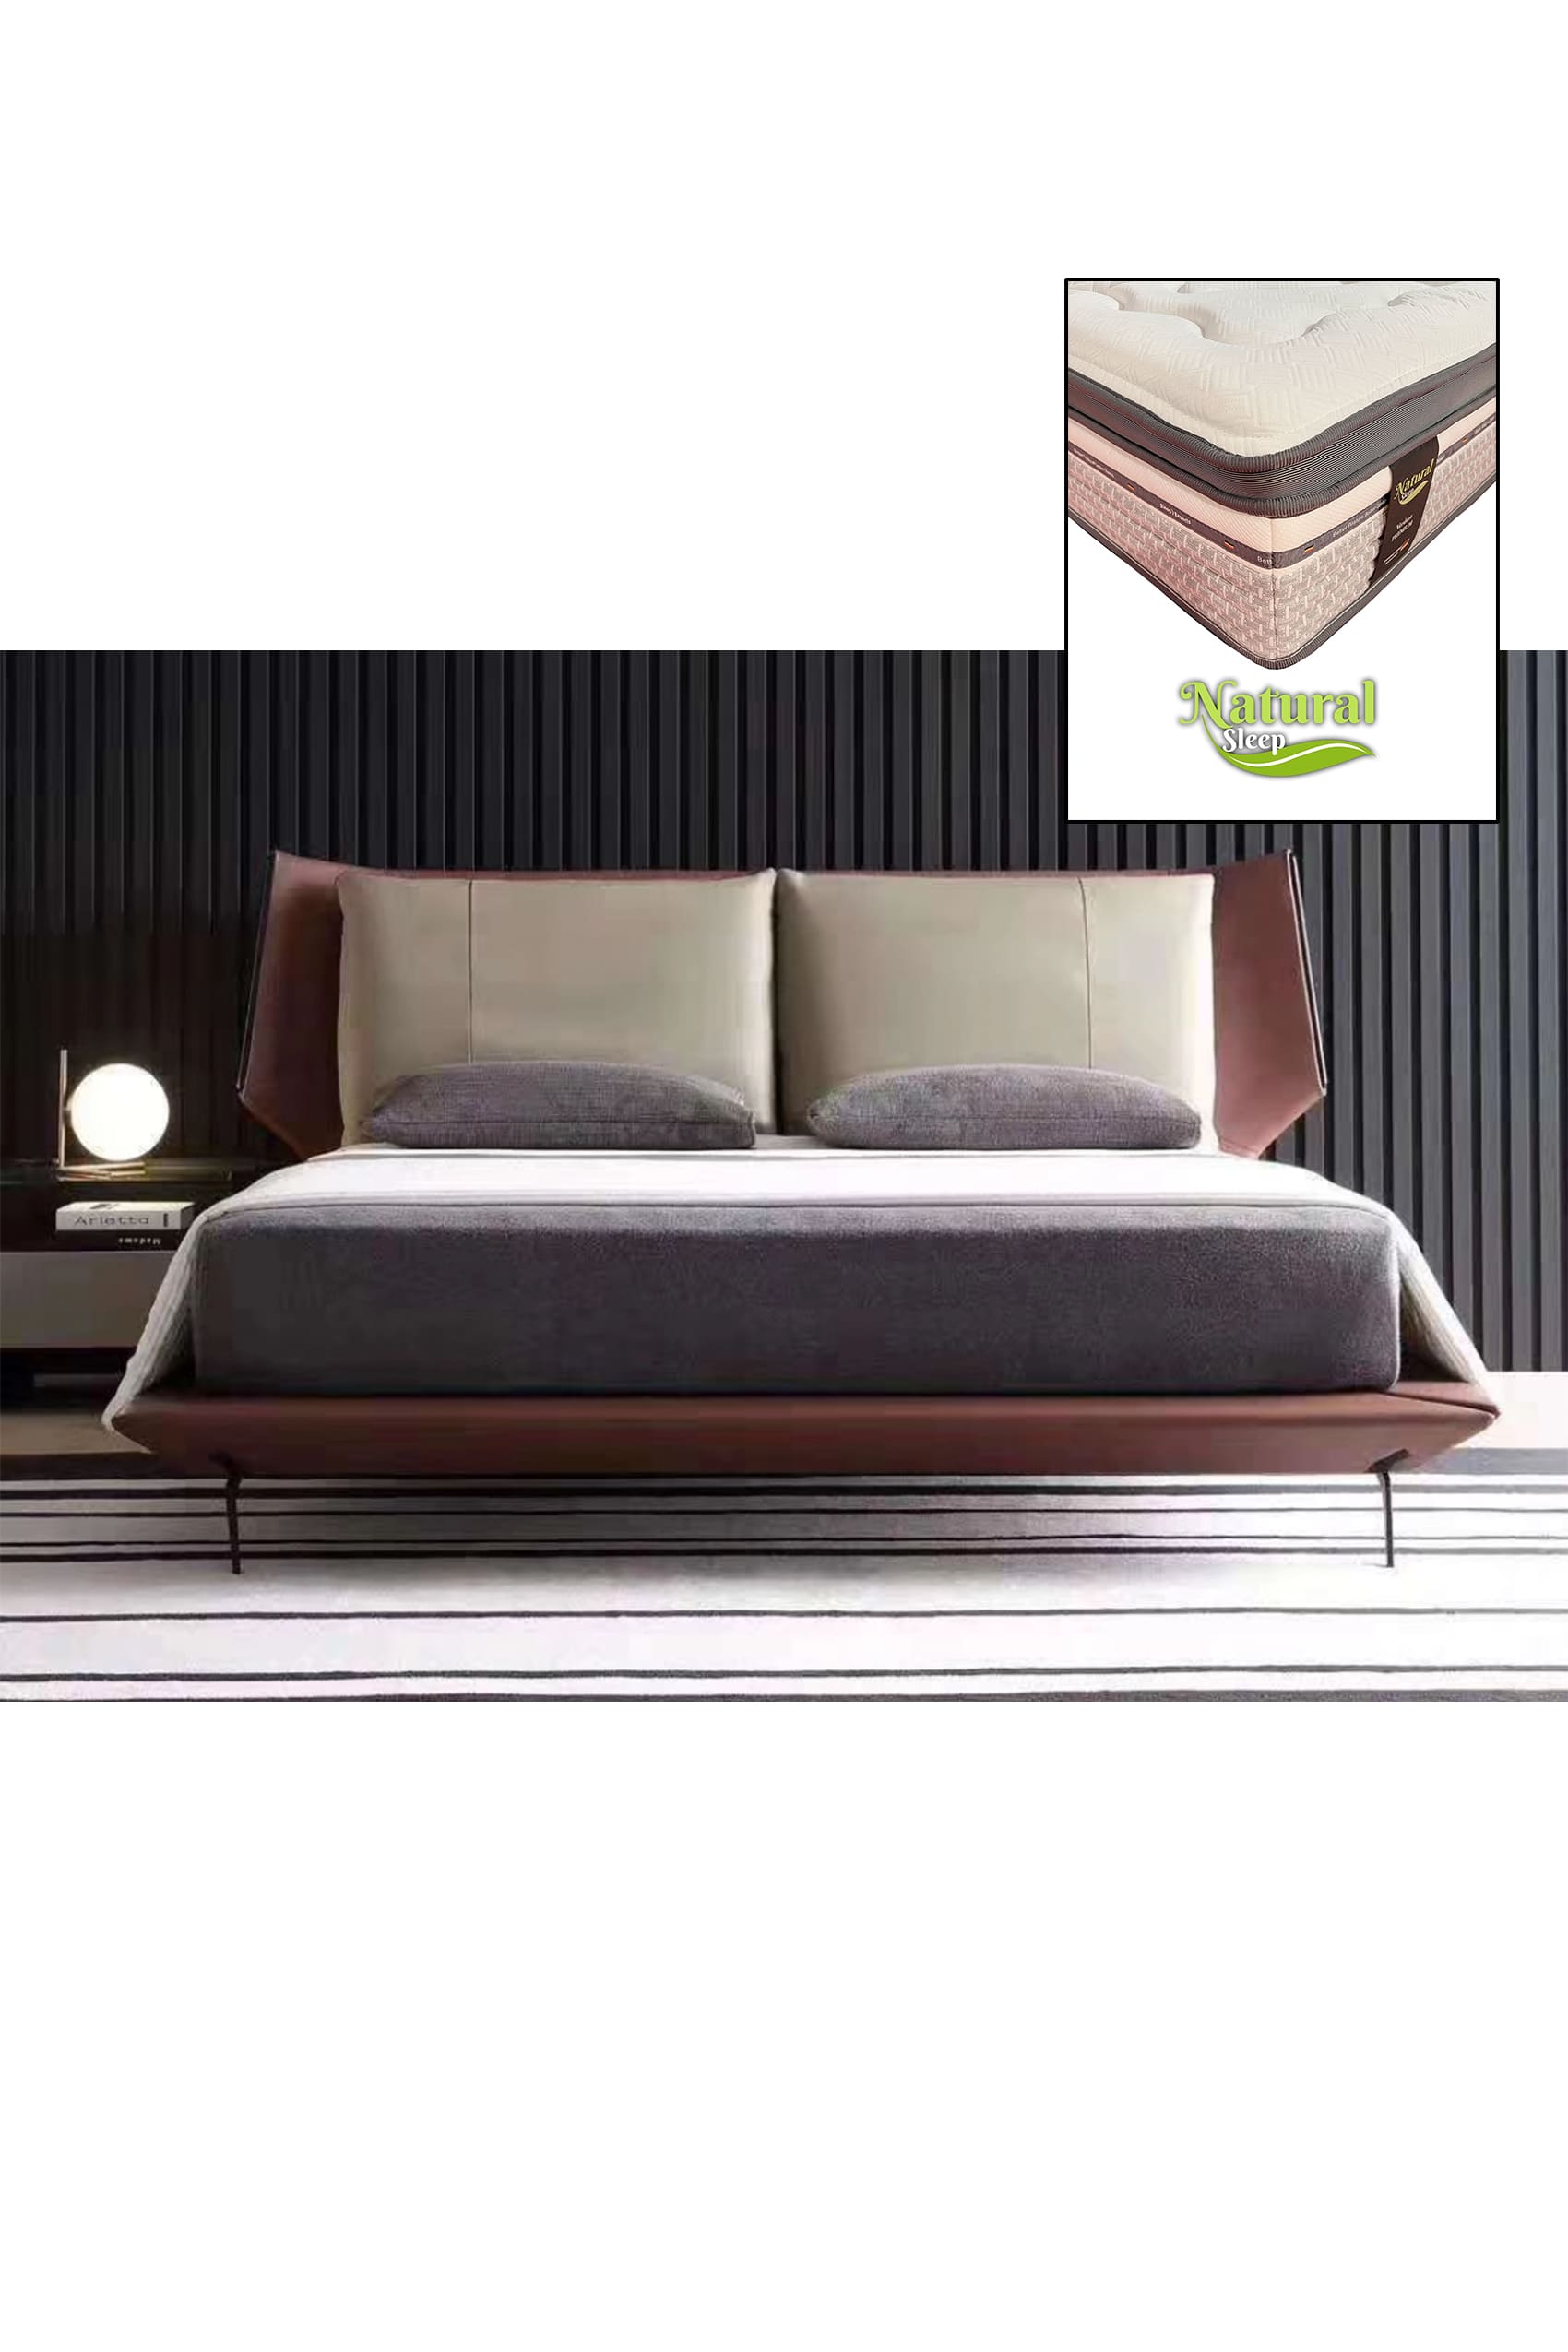 Oriana Designer Bed Frame + Natural Sleep (T5-Verdant)